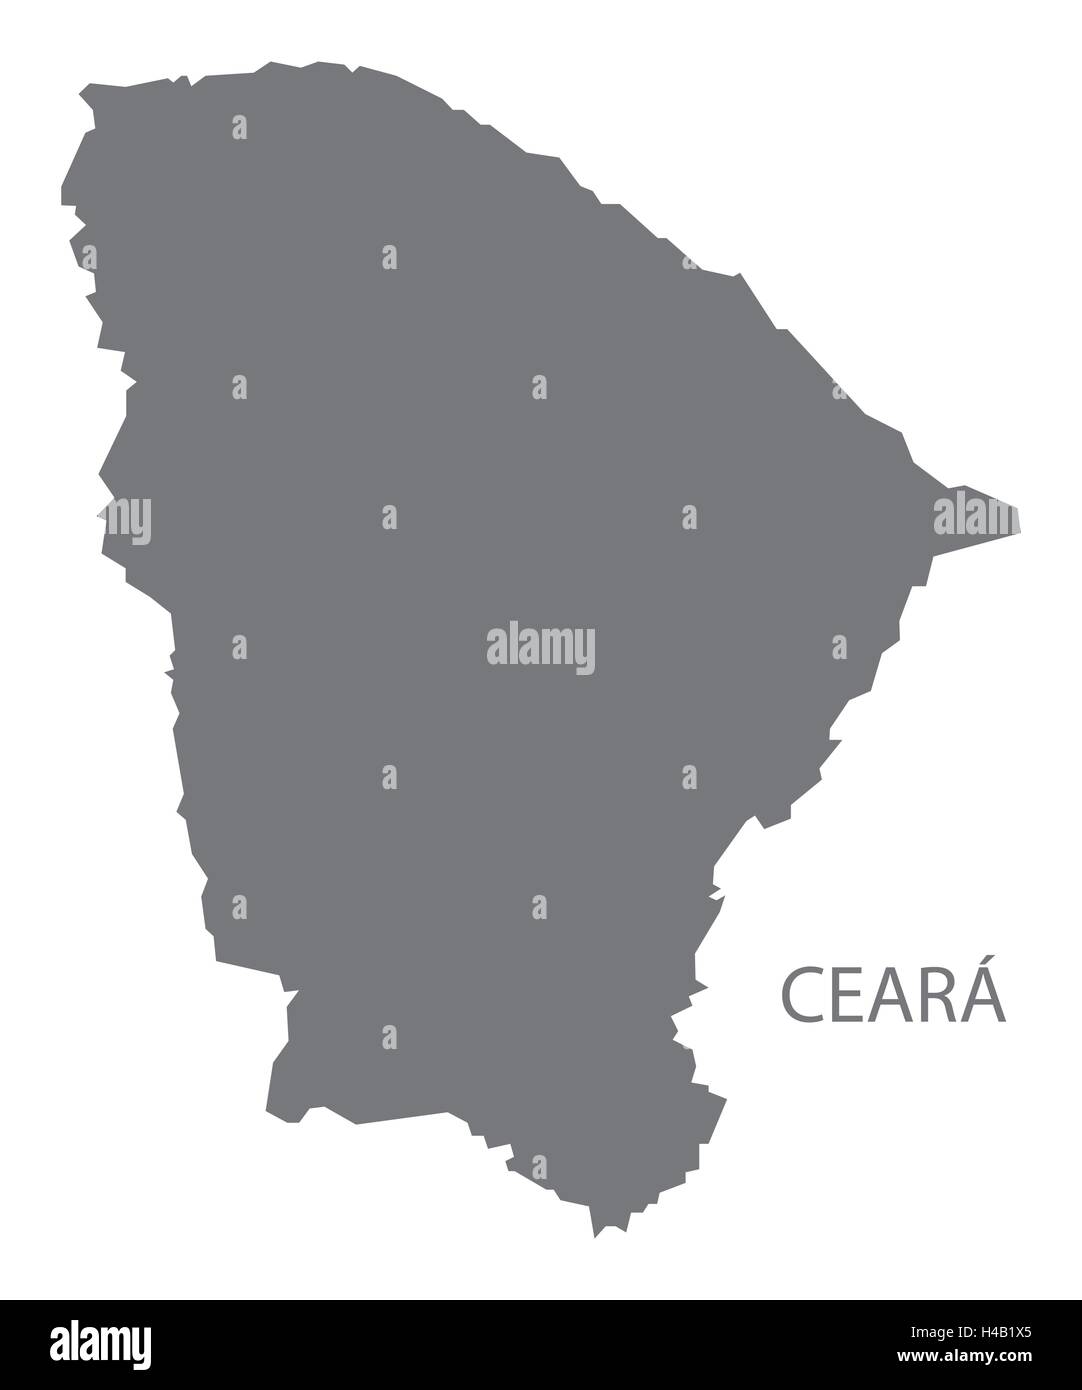 Ceara Brazil map in grey. Stock Vector